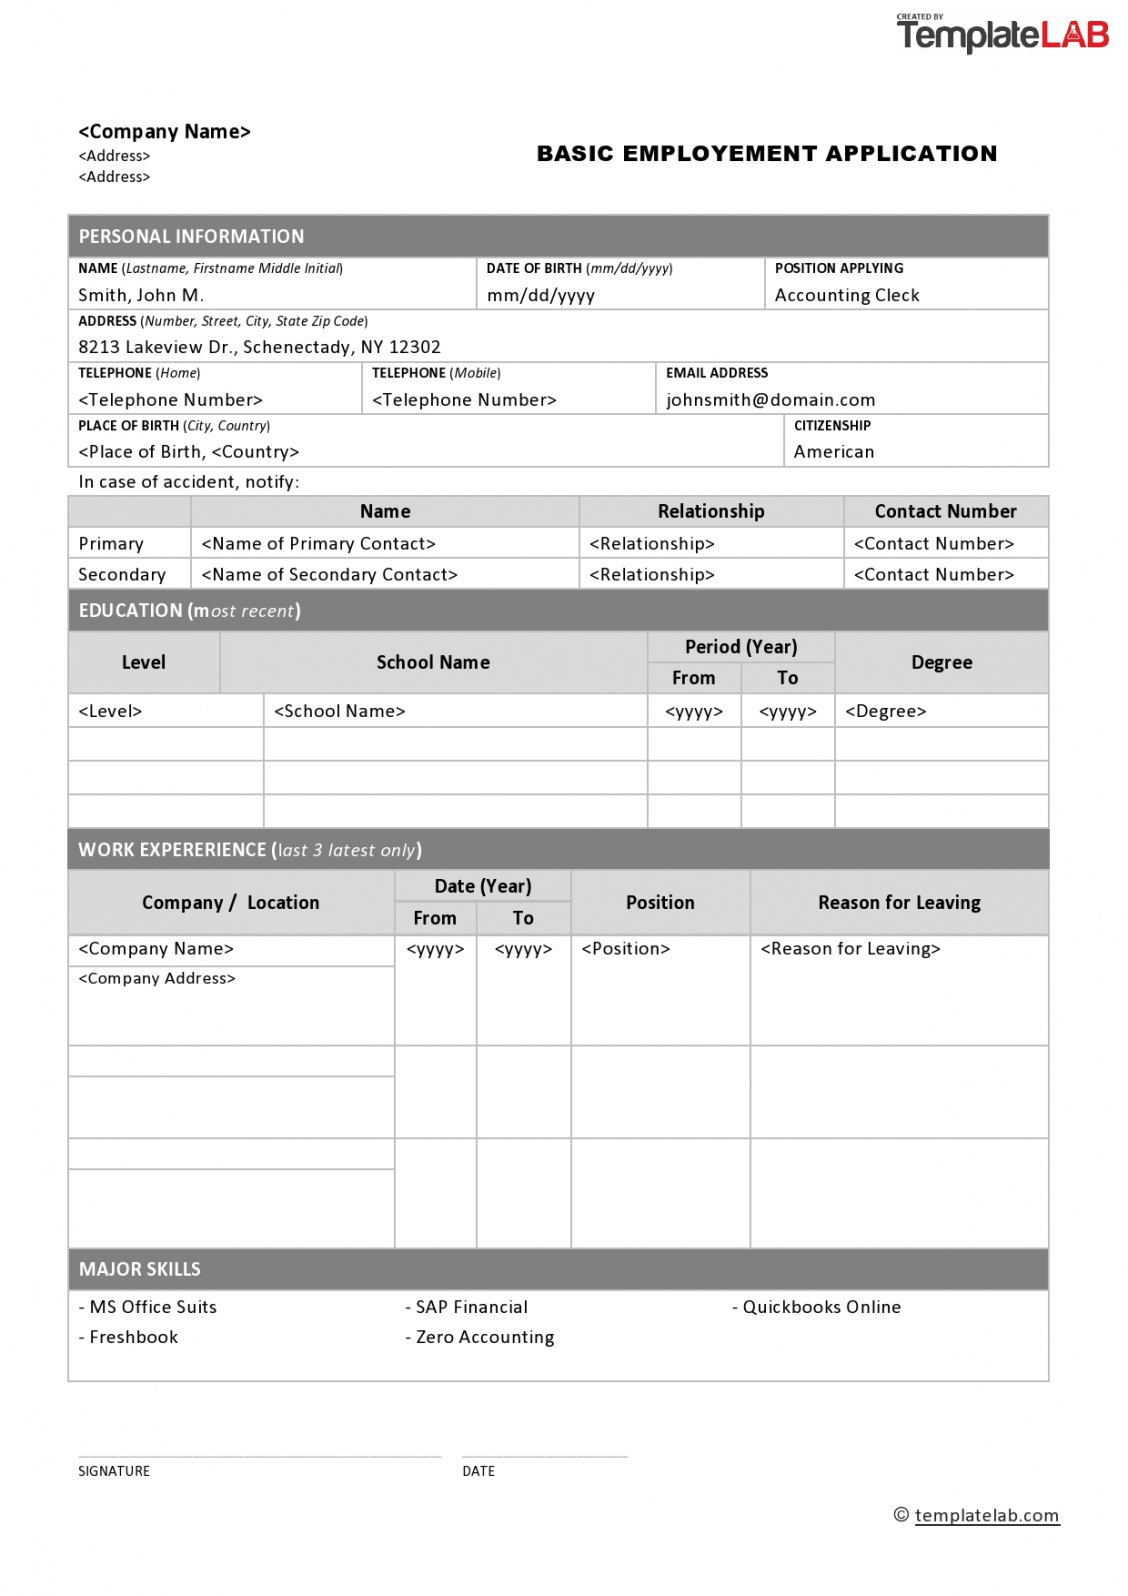 job-application-form-sample-2021-form-template-in-2021-job-vrogue